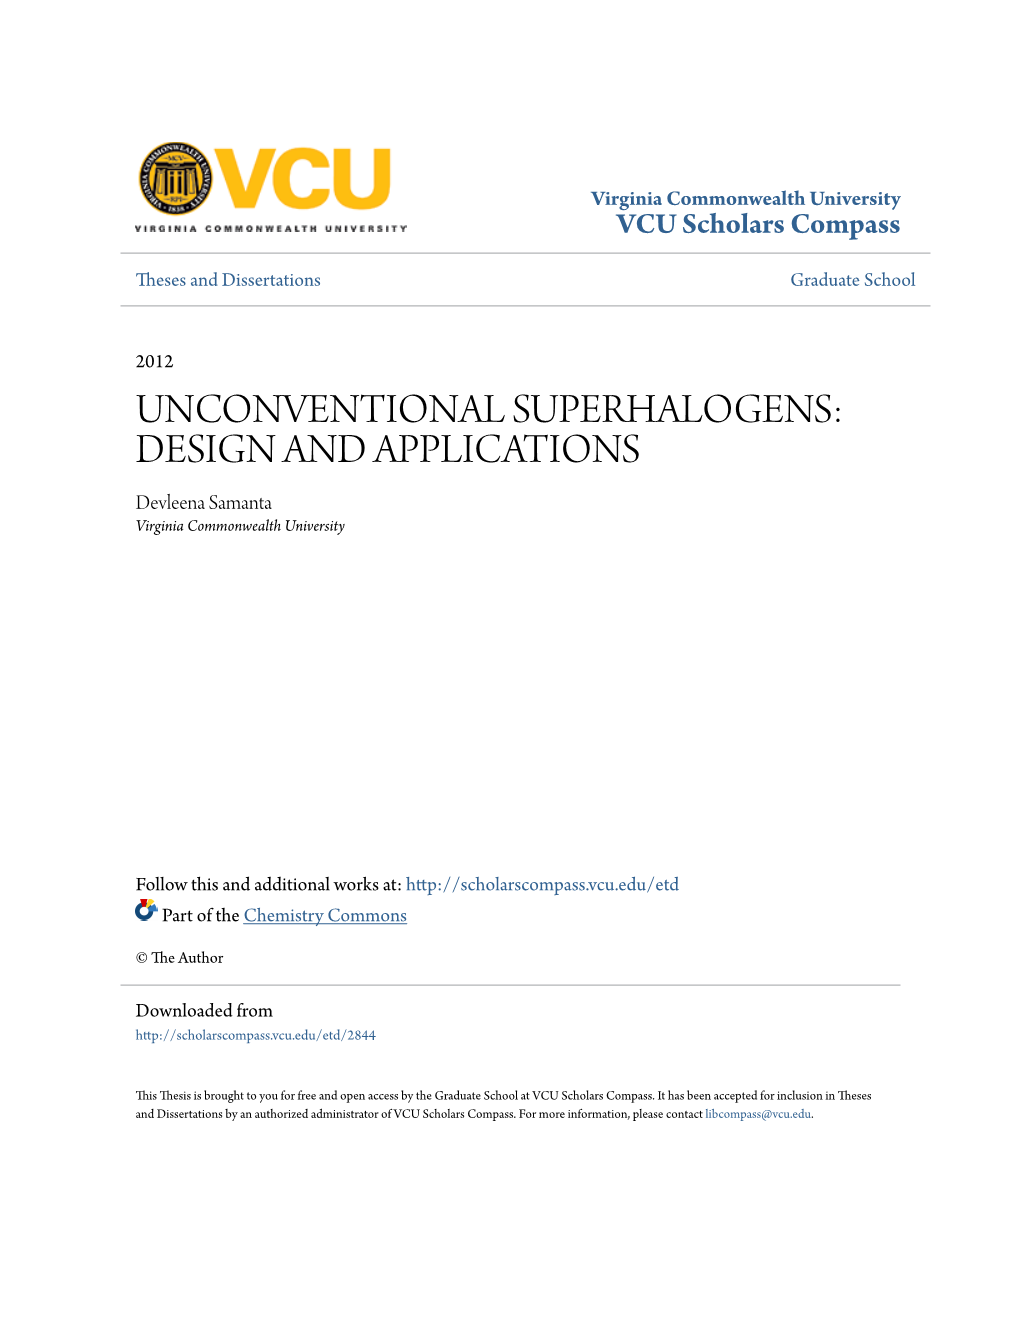 UNCONVENTIONAL SUPERHALOGENS: DESIGN and APPLICATIONS Devleena Samanta Virginia Commonwealth University